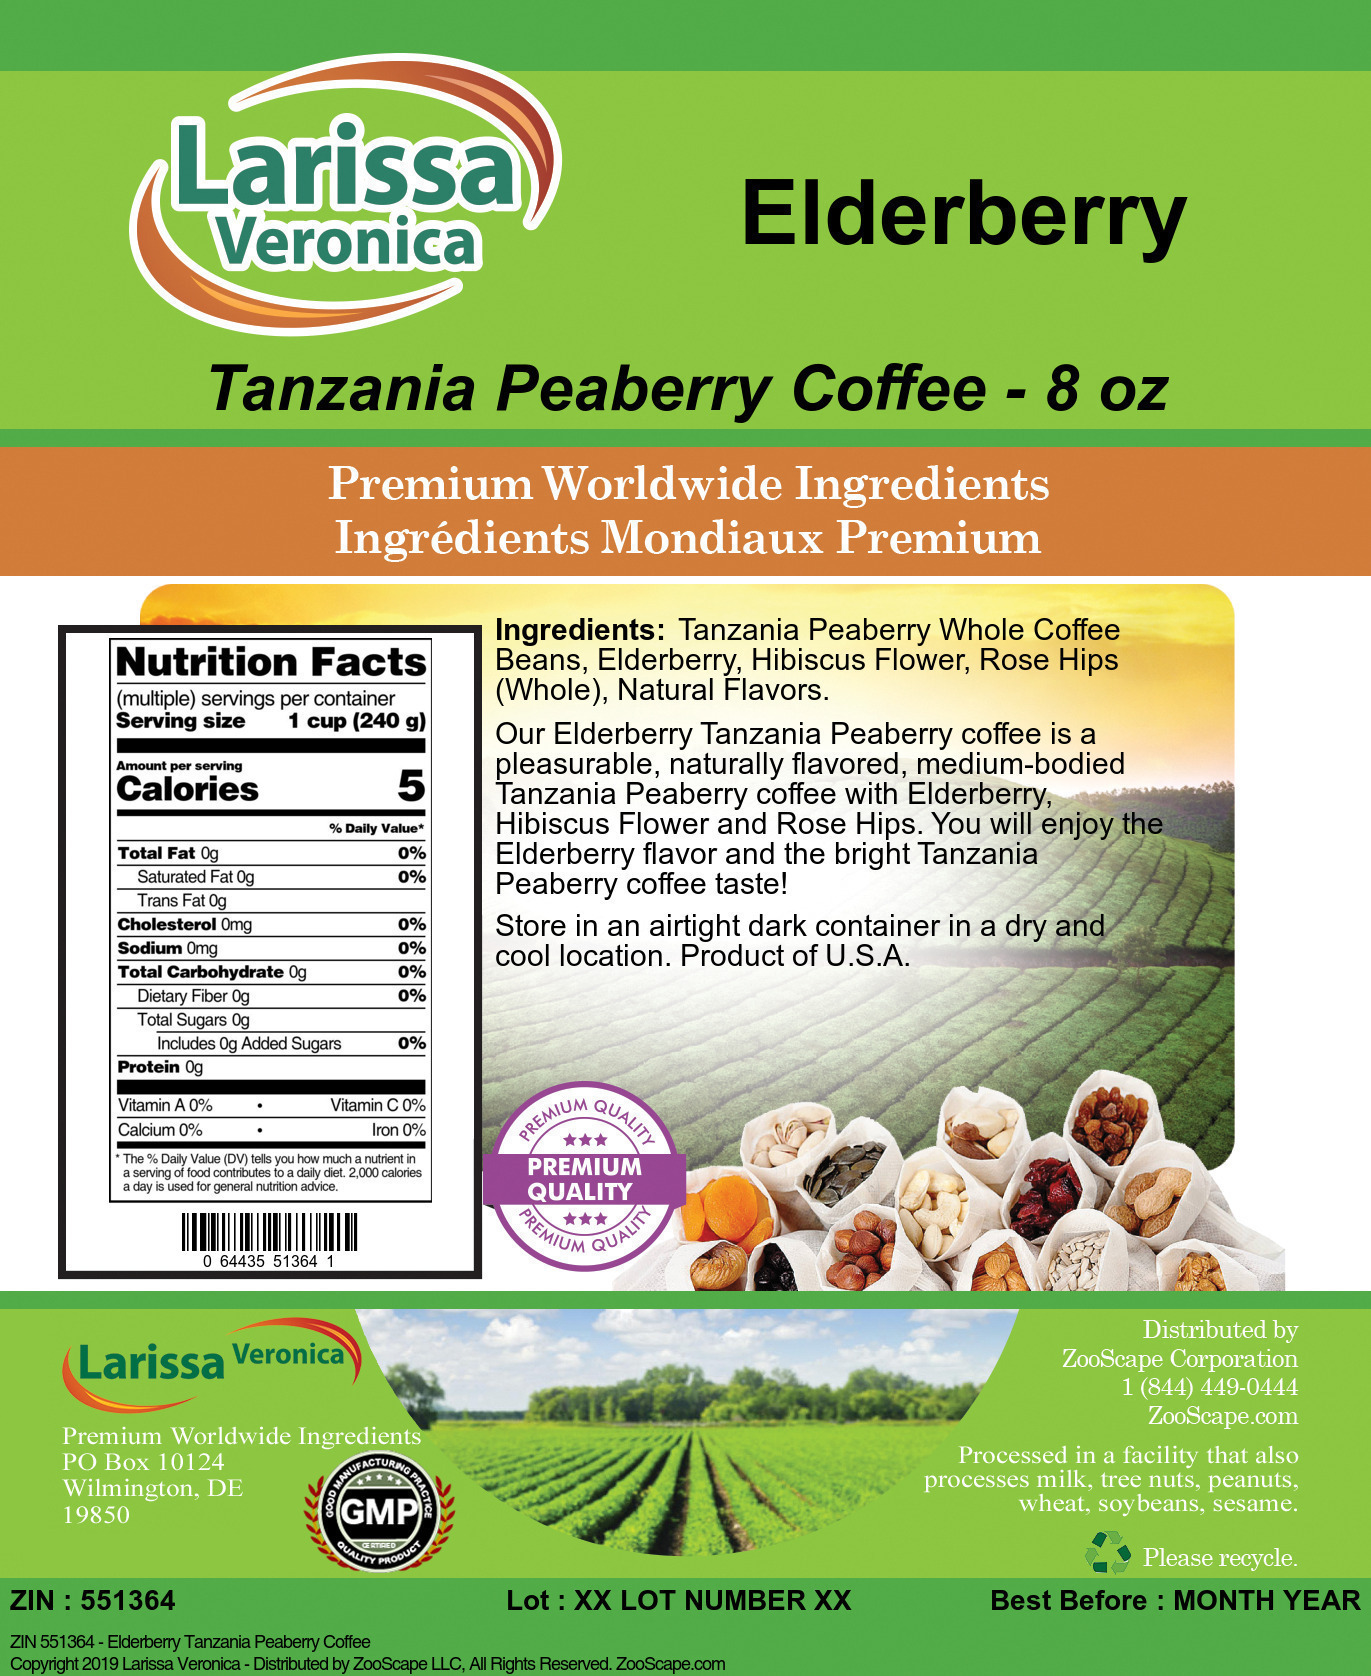 Elderberry Tanzania Peaberry Coffee - Label